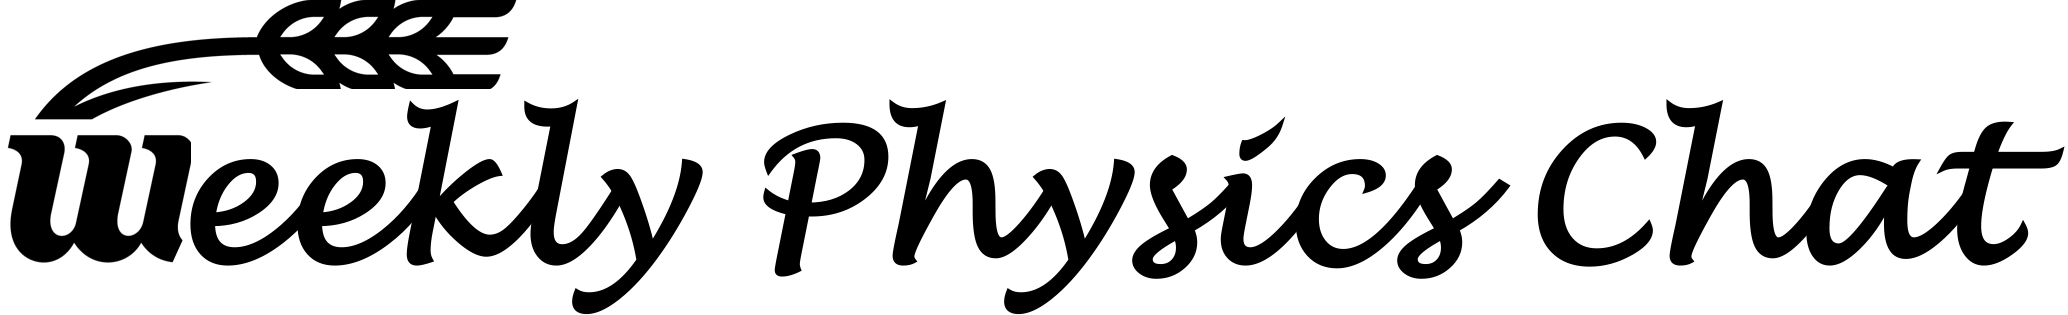 Weekly Physics Chat logo